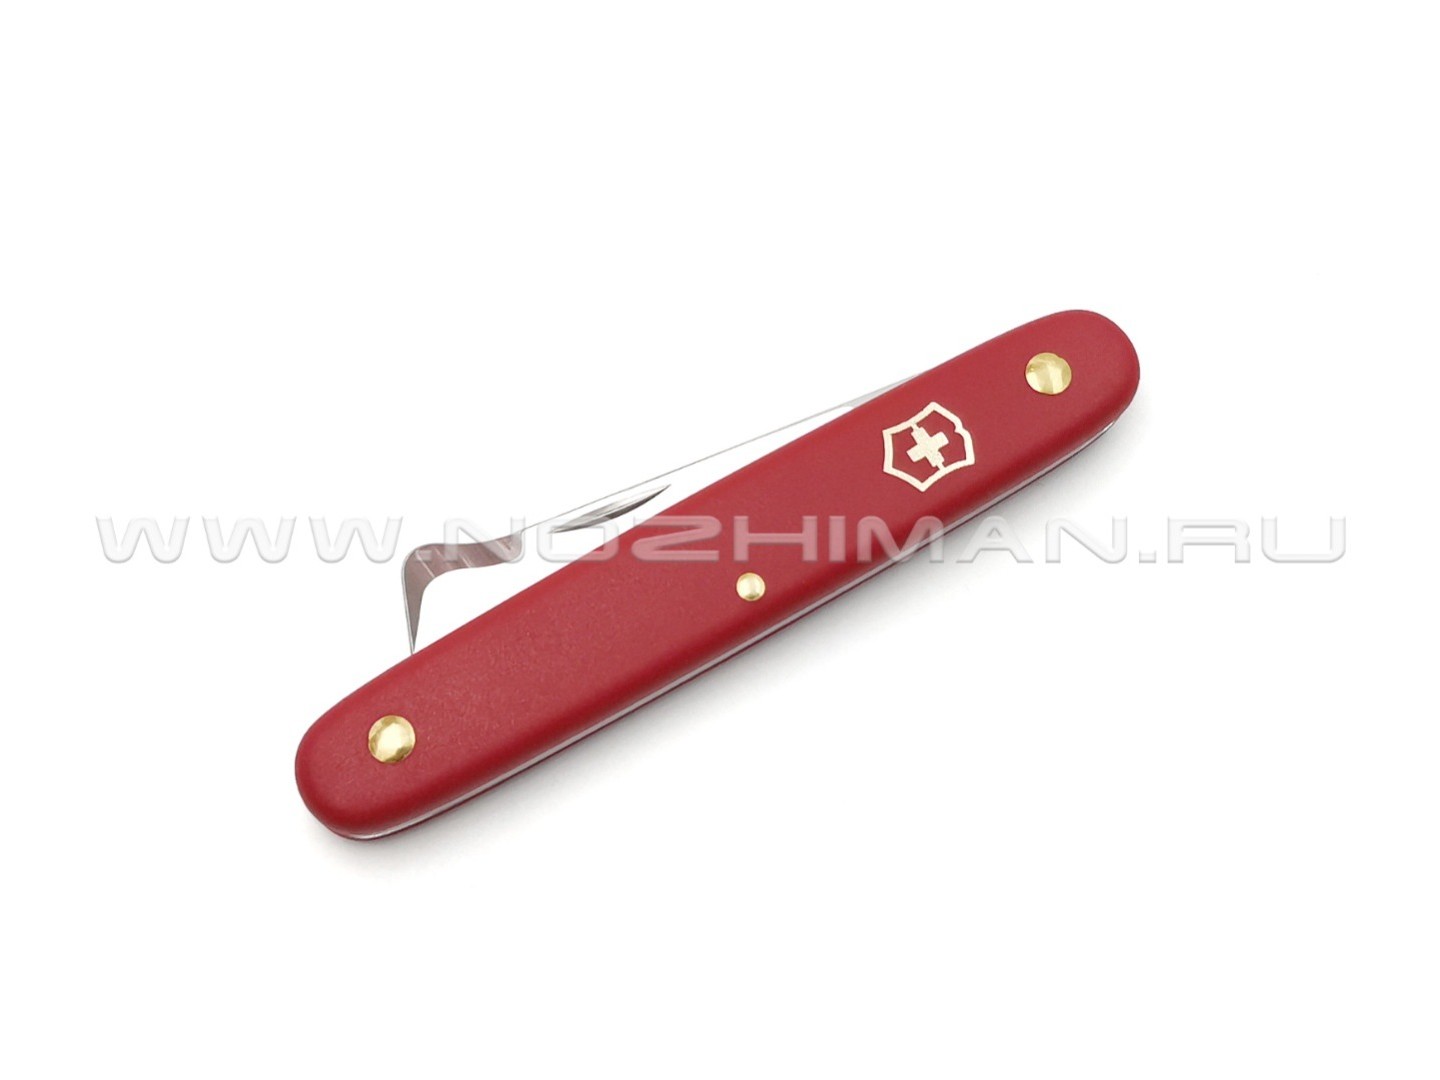 Нож для прививки растений Victorinox 3.9020 Budding Knife Combi Red сталь X55CrMo14, рукоять Nylon